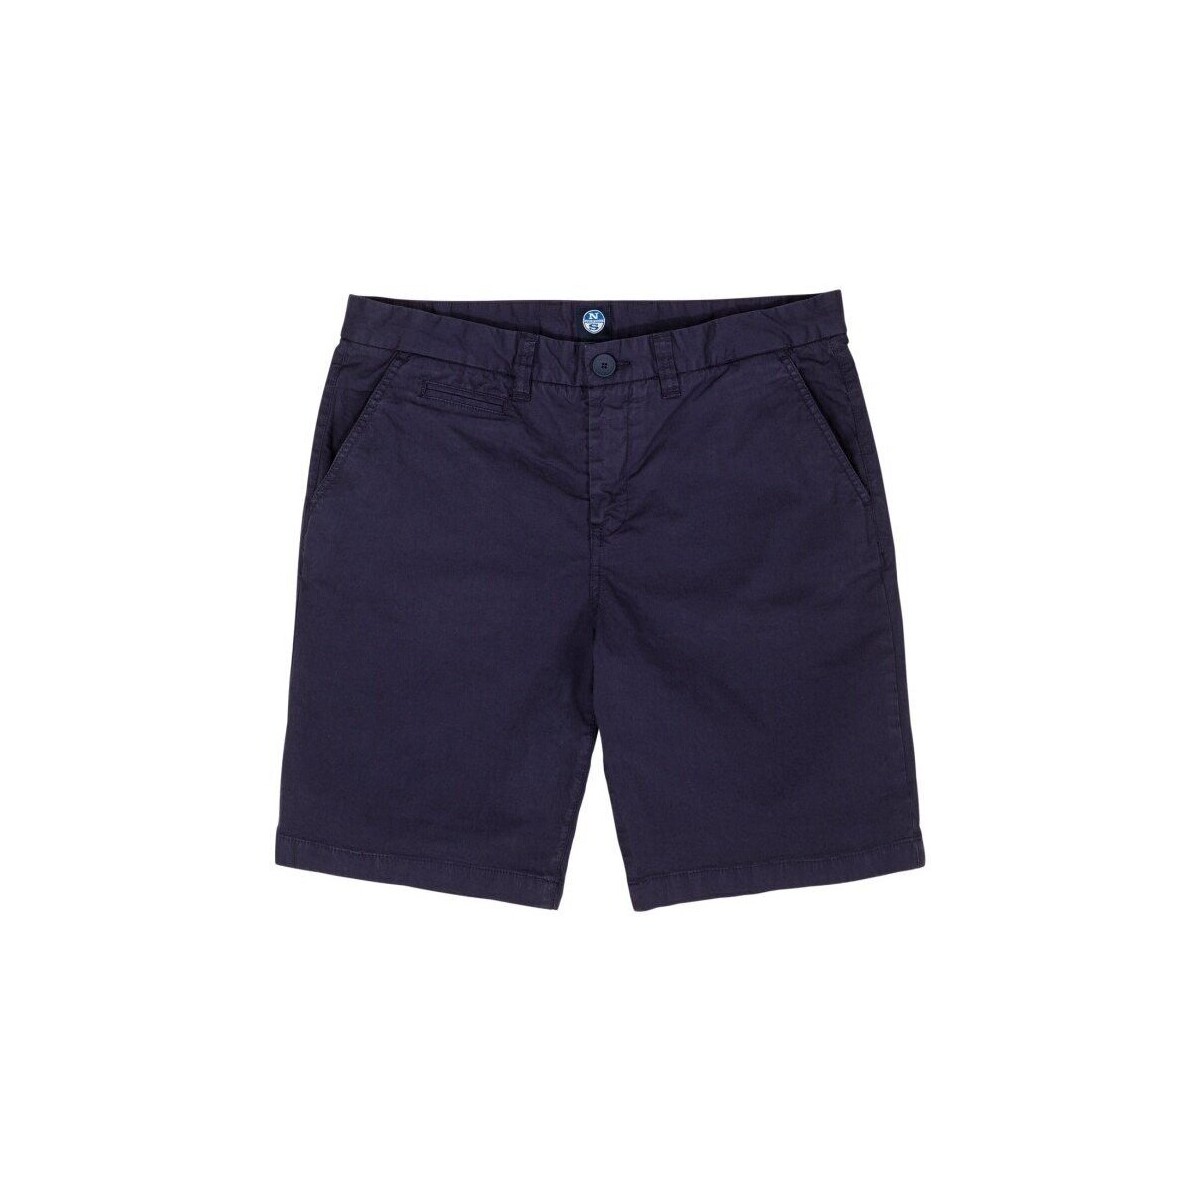 Abbigliamento Uomo Shorts / Bermuda North Sails Short Uomo Lowell Chino Blu